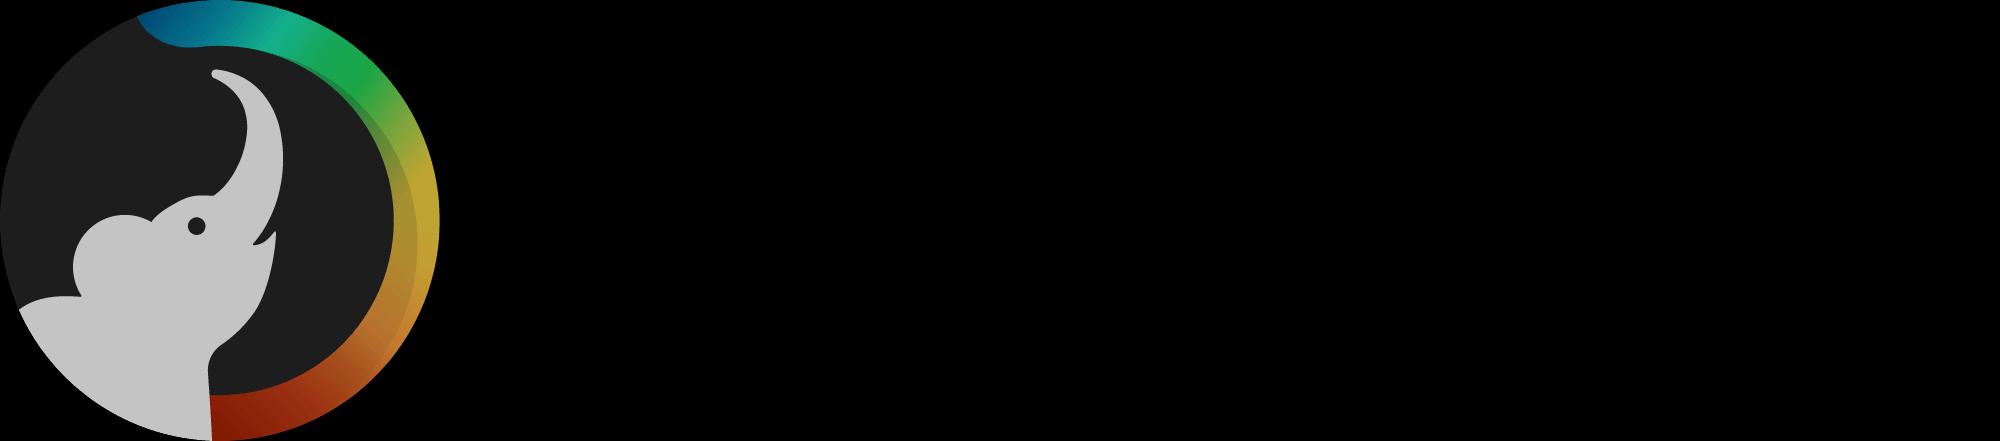 BreezoMeter (בריזומיטר)_logo